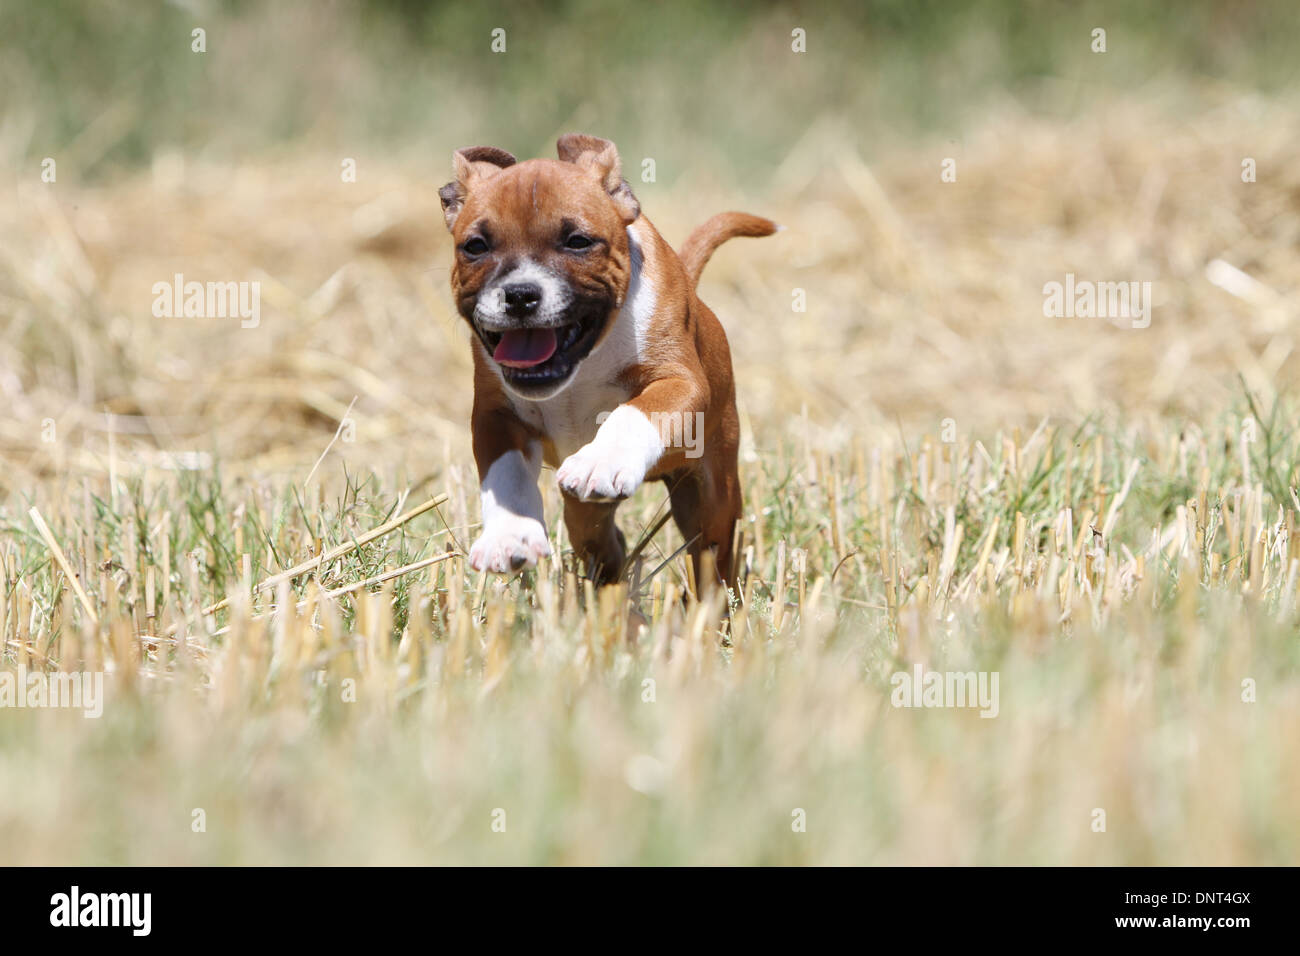 dog Staffordshire Bull Terrier / Staffie  puppy running in a field Stock Photo